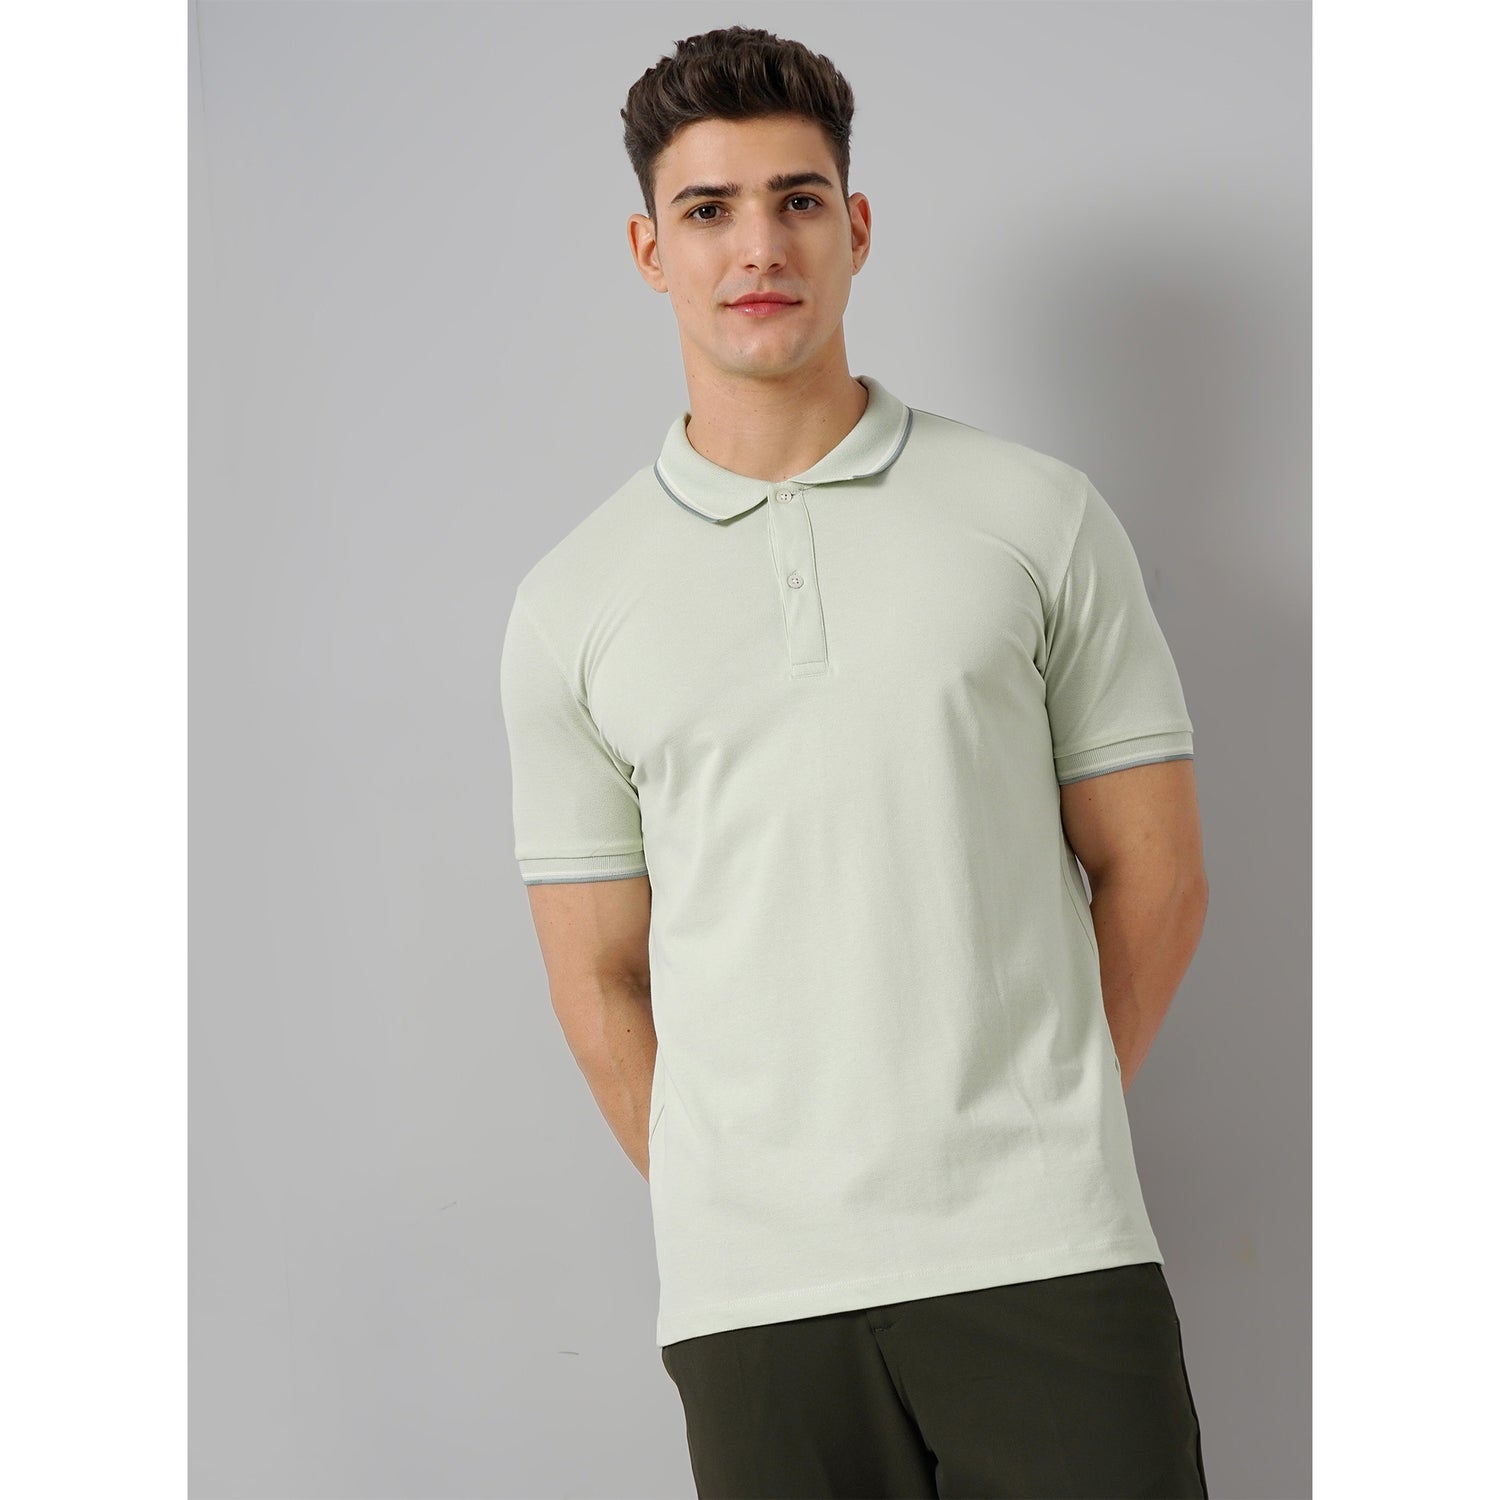 Solid Green Cotton-Blend T-Shirt (DECOLRAYEB3)